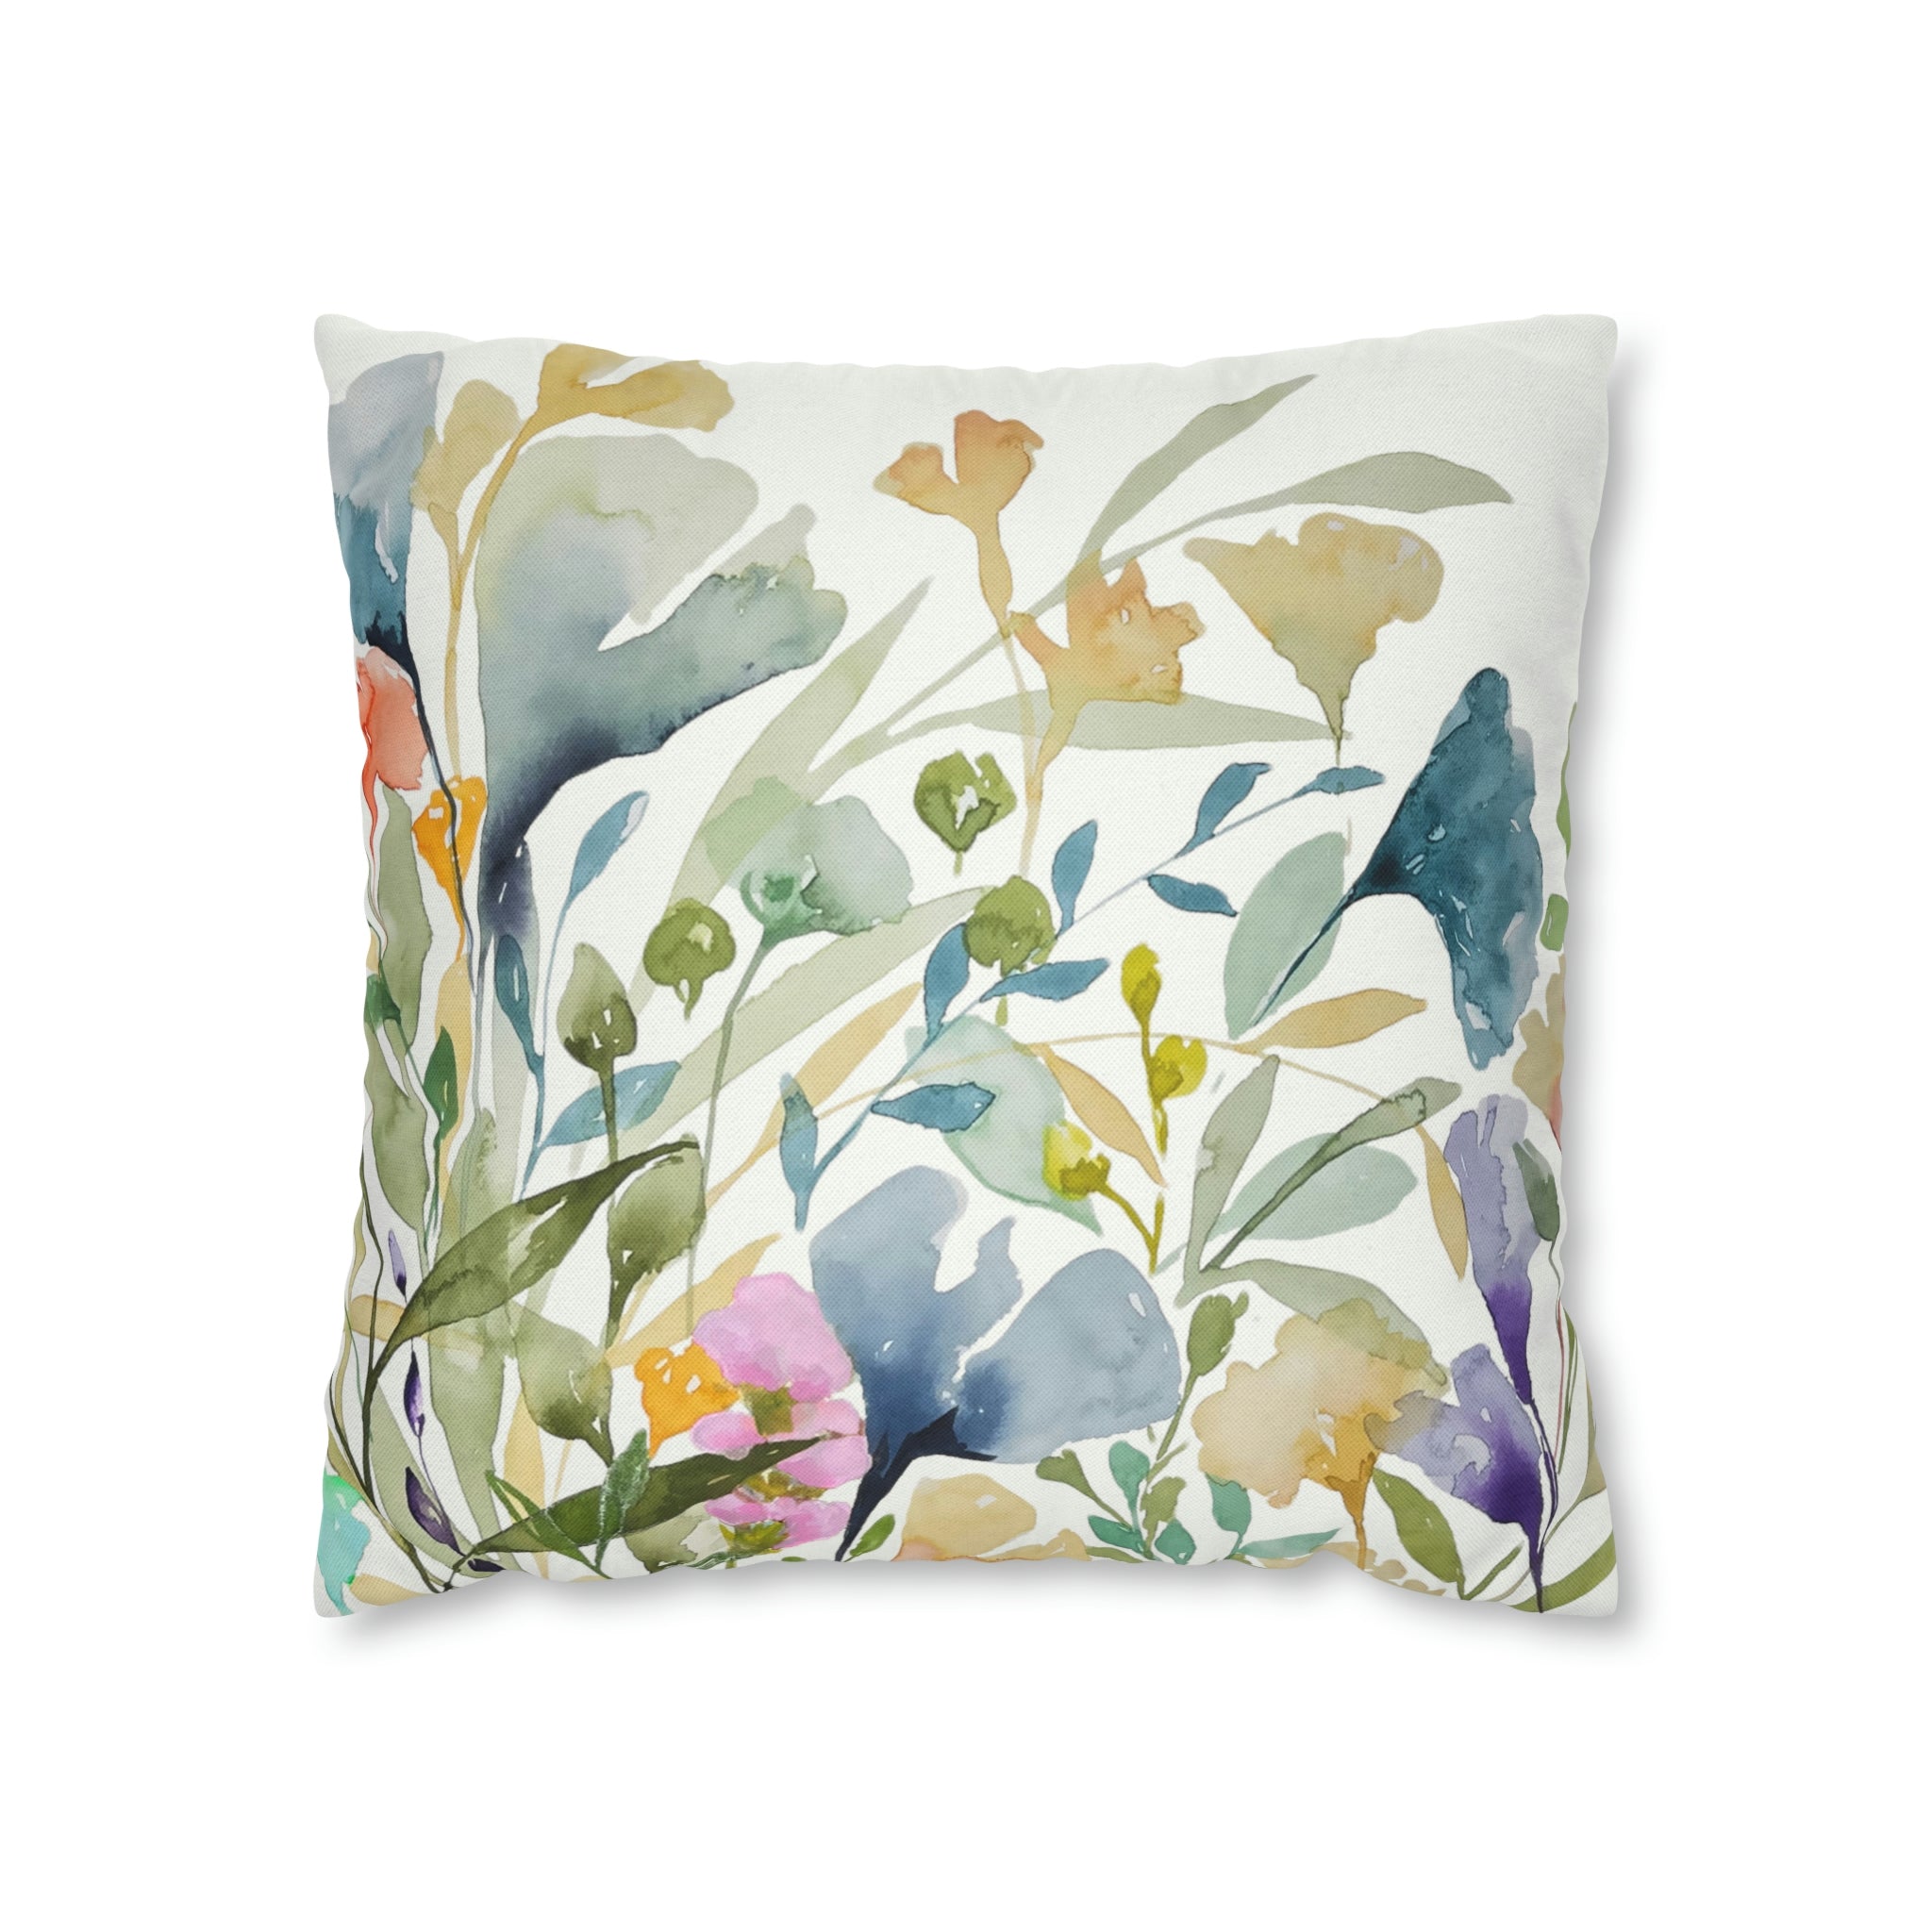 Springles #2 Botanical Garden Print on Throw Pillow Cover